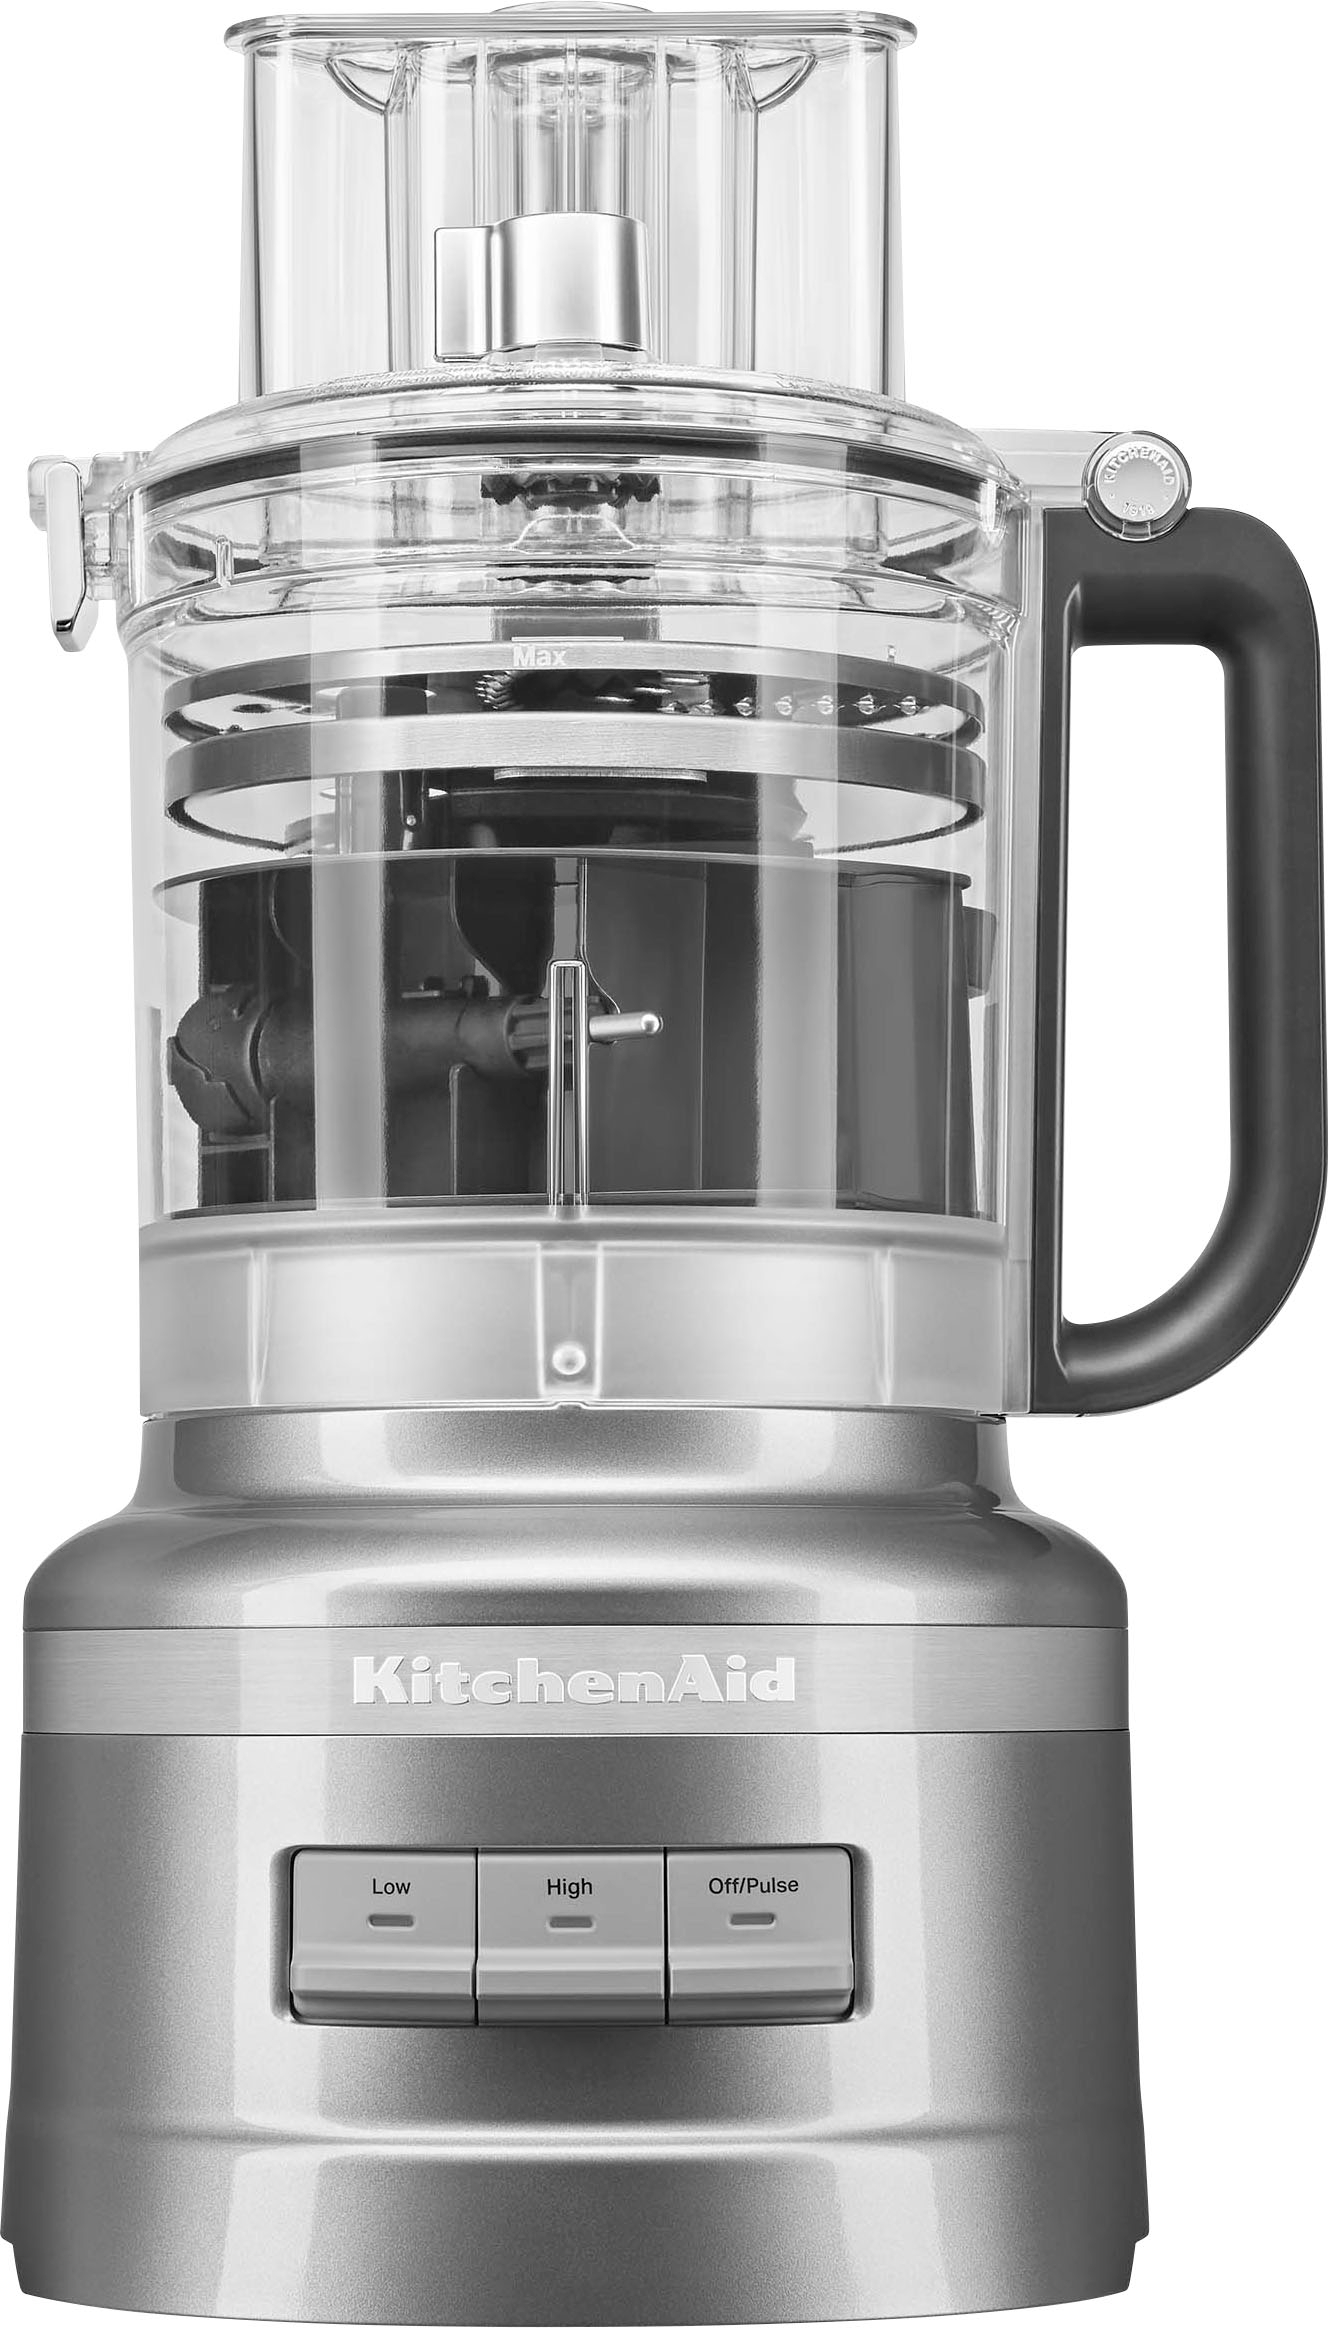 KitchenAid 13-Cup Food Processor in Black Matte